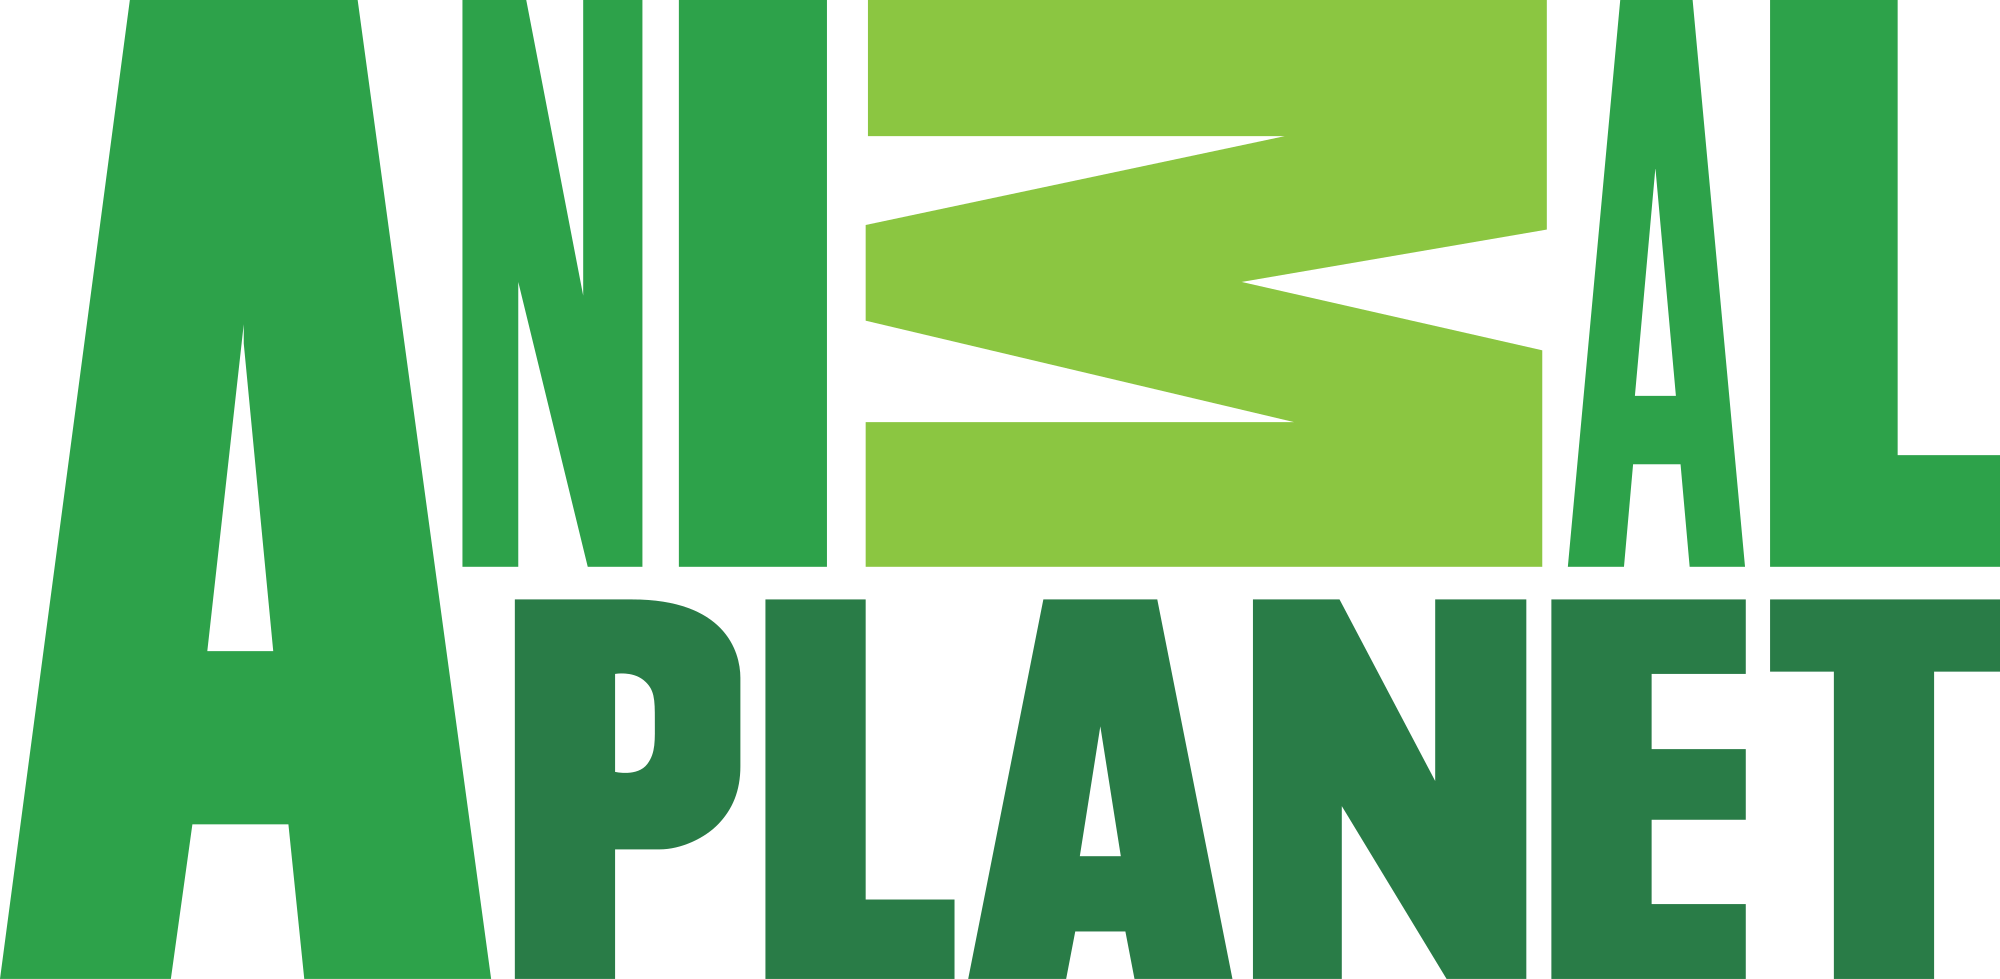 Animal Planet Text Based Logo Design 